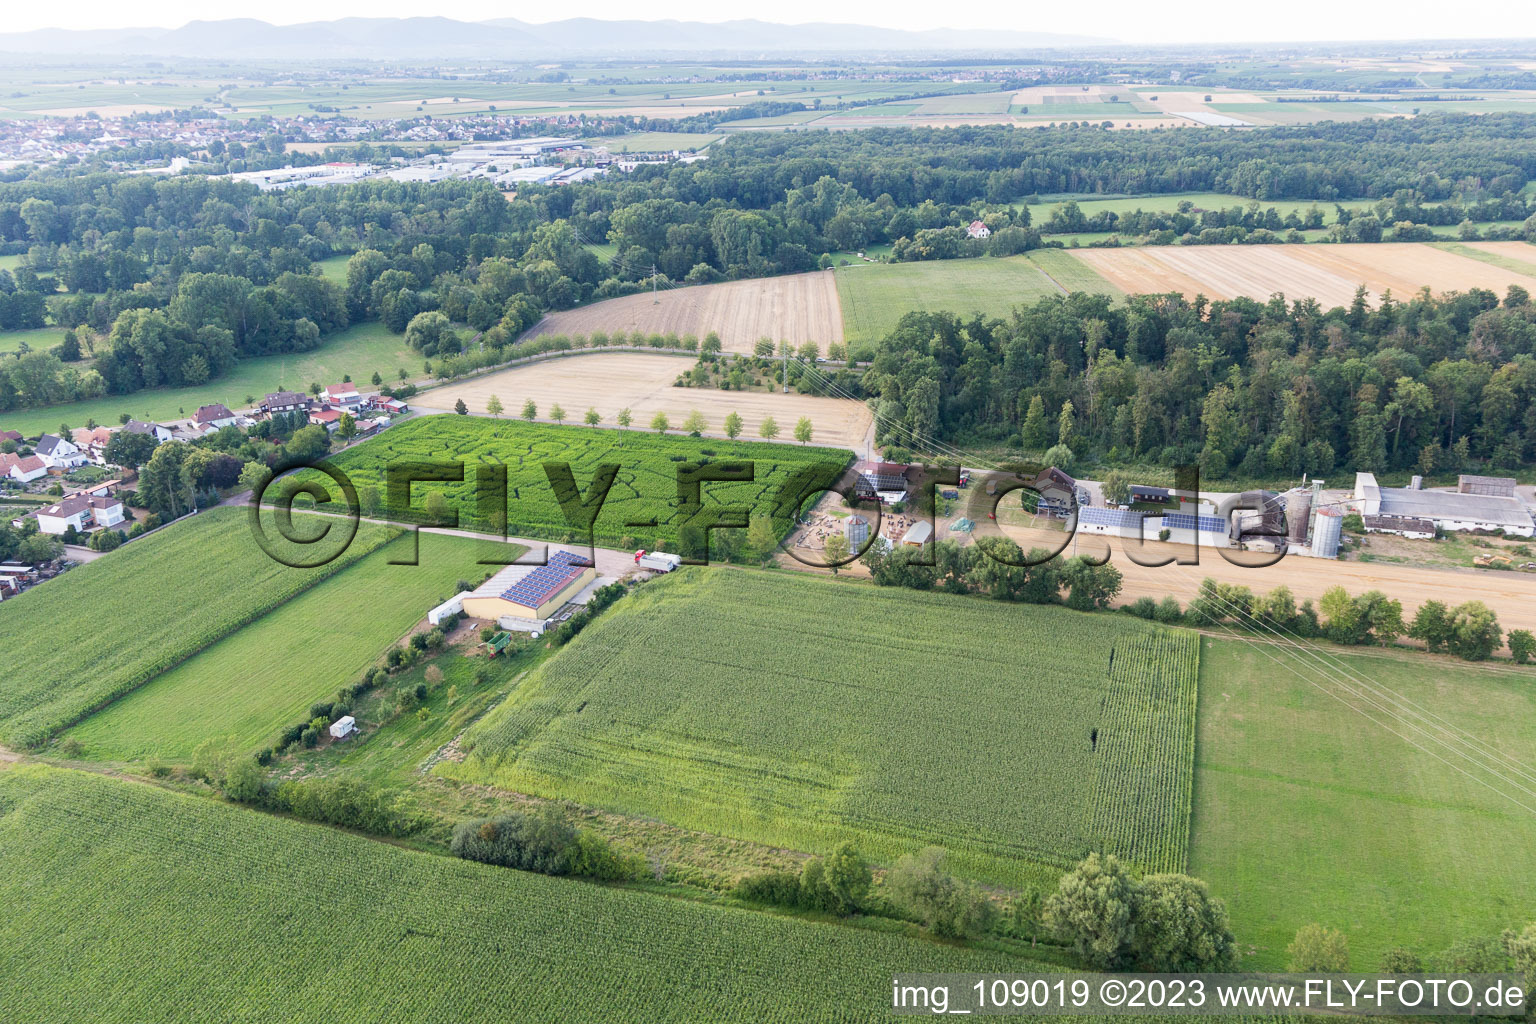 Corn maze at Seehof in Steinweiler in the state Rhineland-Palatinate, Germany